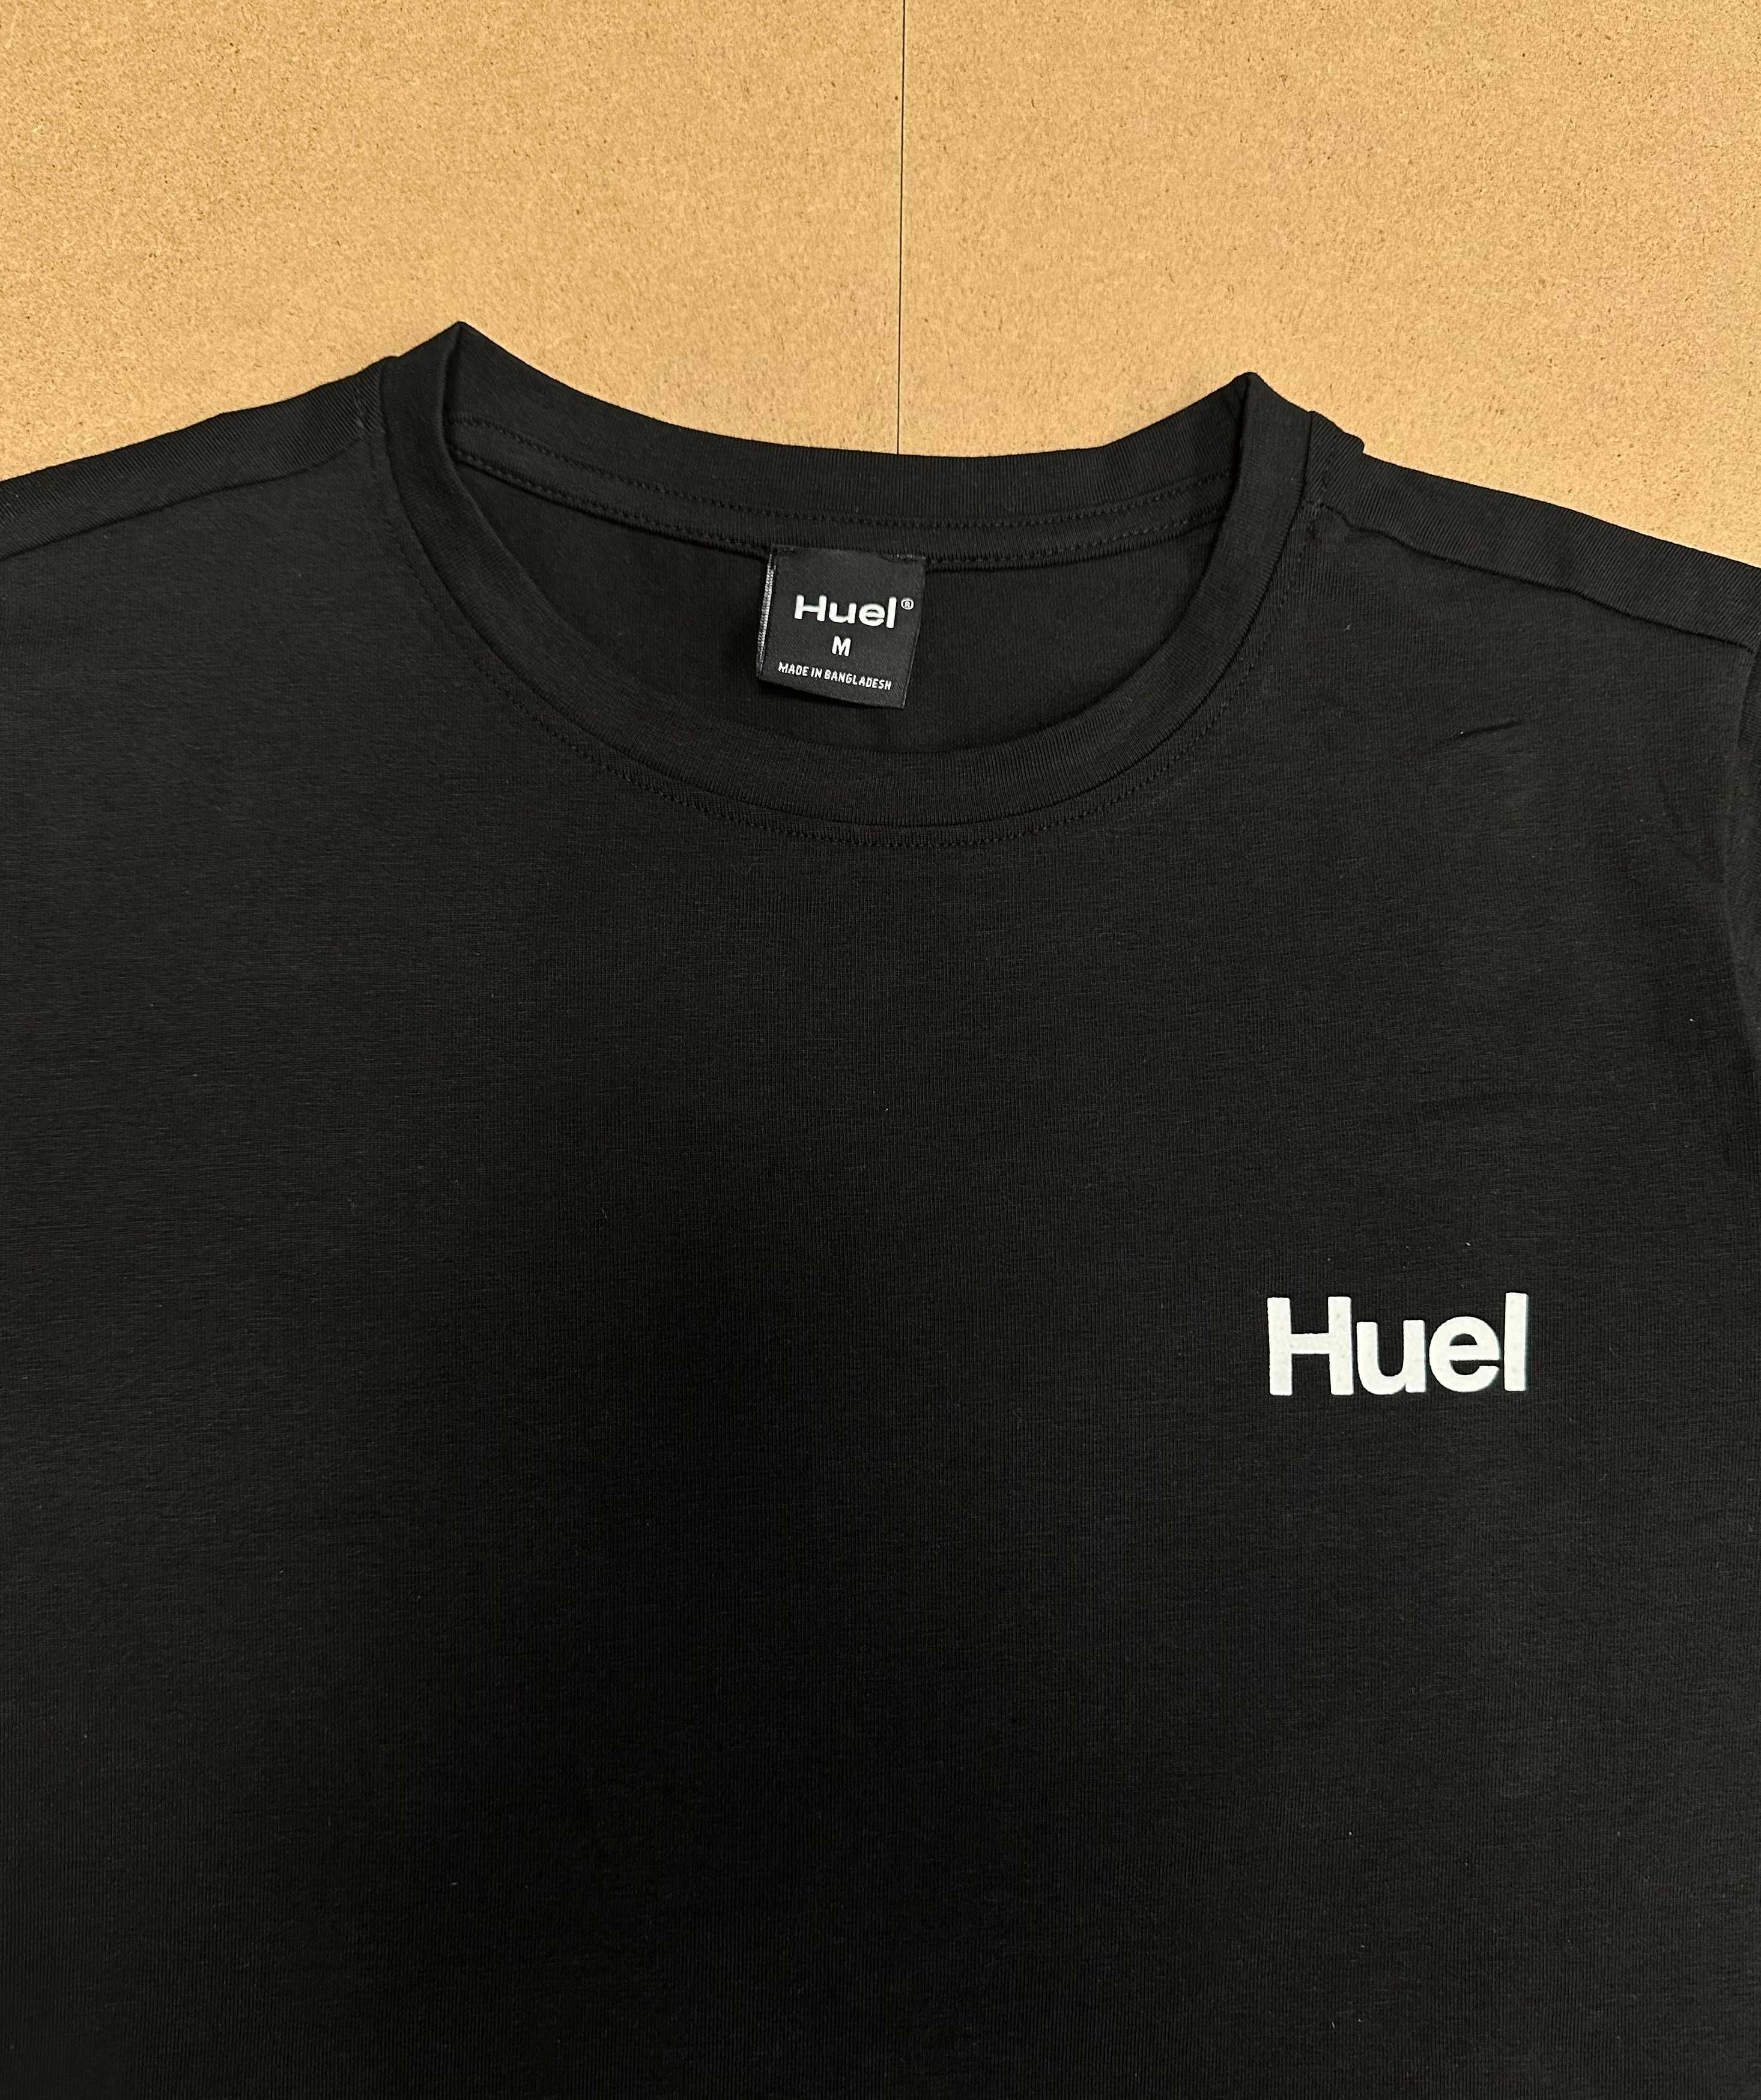 Koszulka damska T-Shirt damski Huel rozmiar S/M/L/XL czarna 2 sztuki